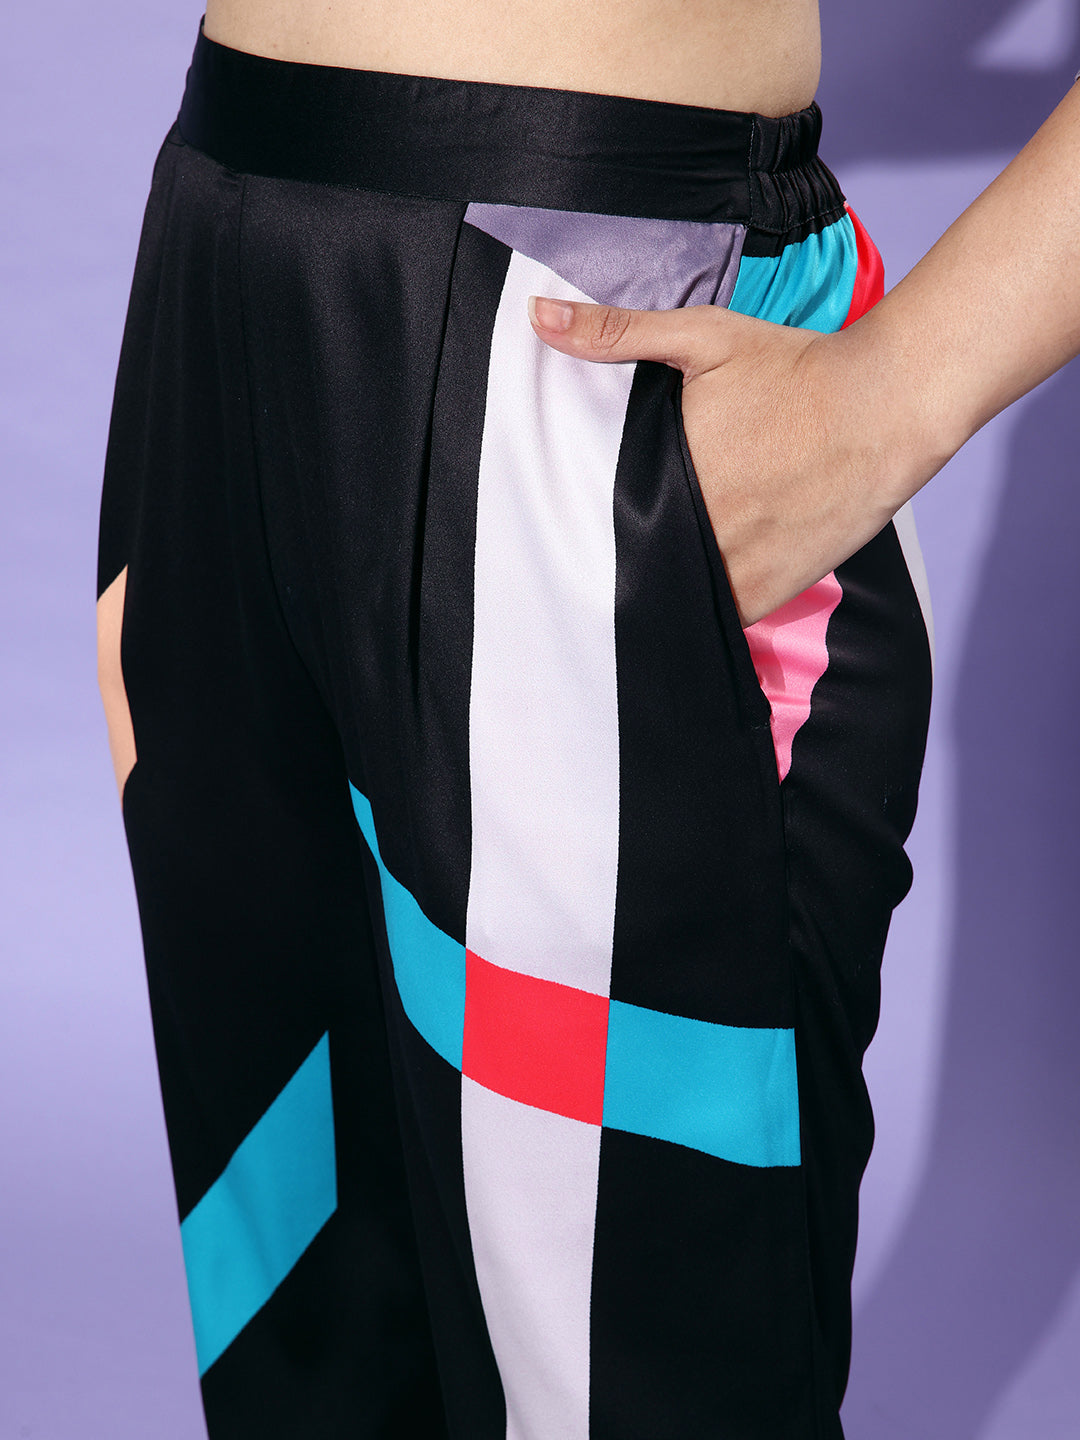 StyleStone Women's Black & Beige Satin Shirt and Trousers Co-ord Set